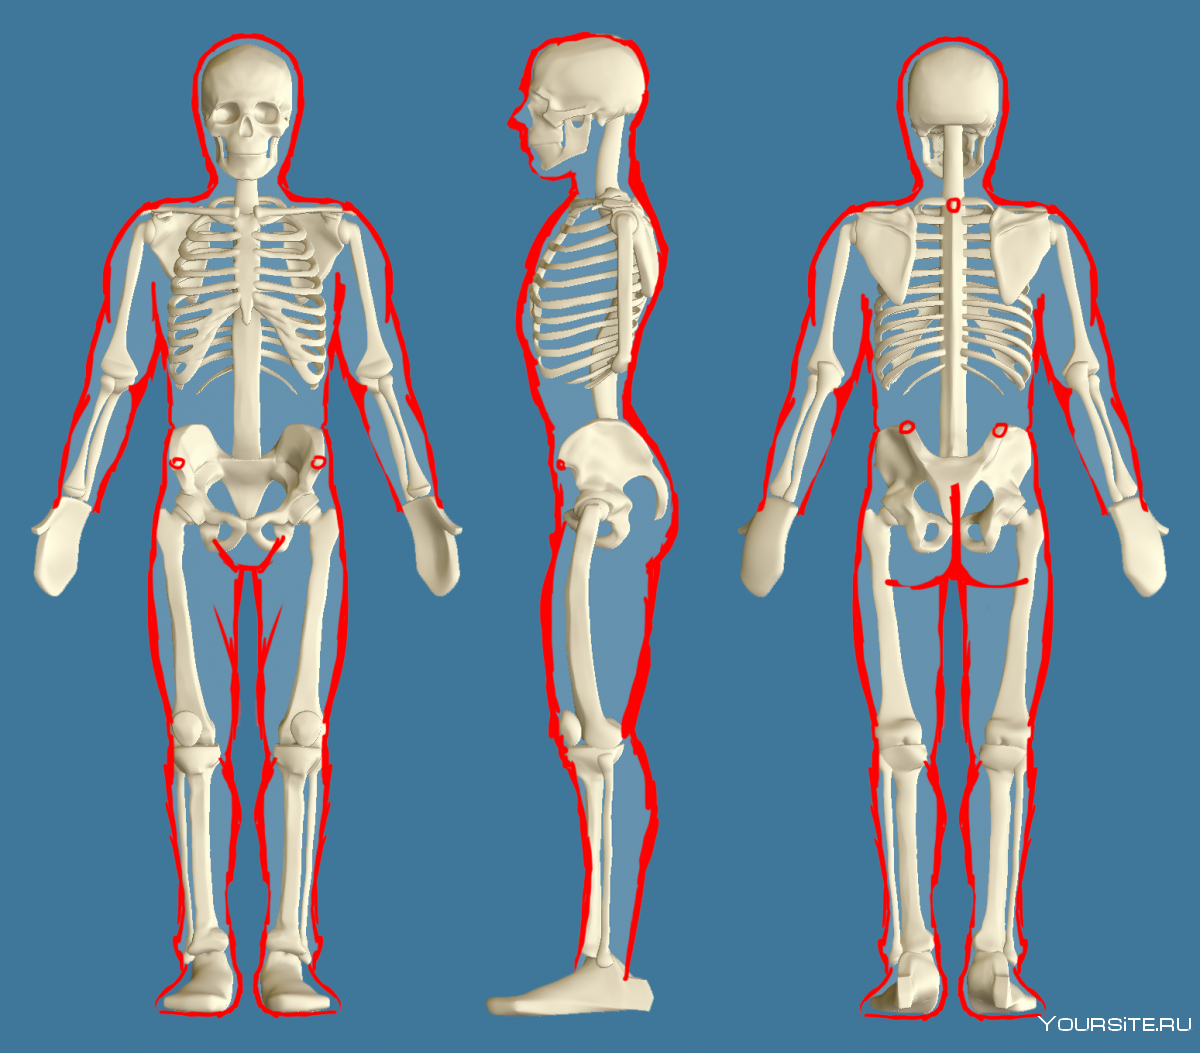 Три типа скелета. Скелет женщины реферанс. Анатомия человека кости скелета женщины. Скелет мужчины референс. Строение скелета референс.